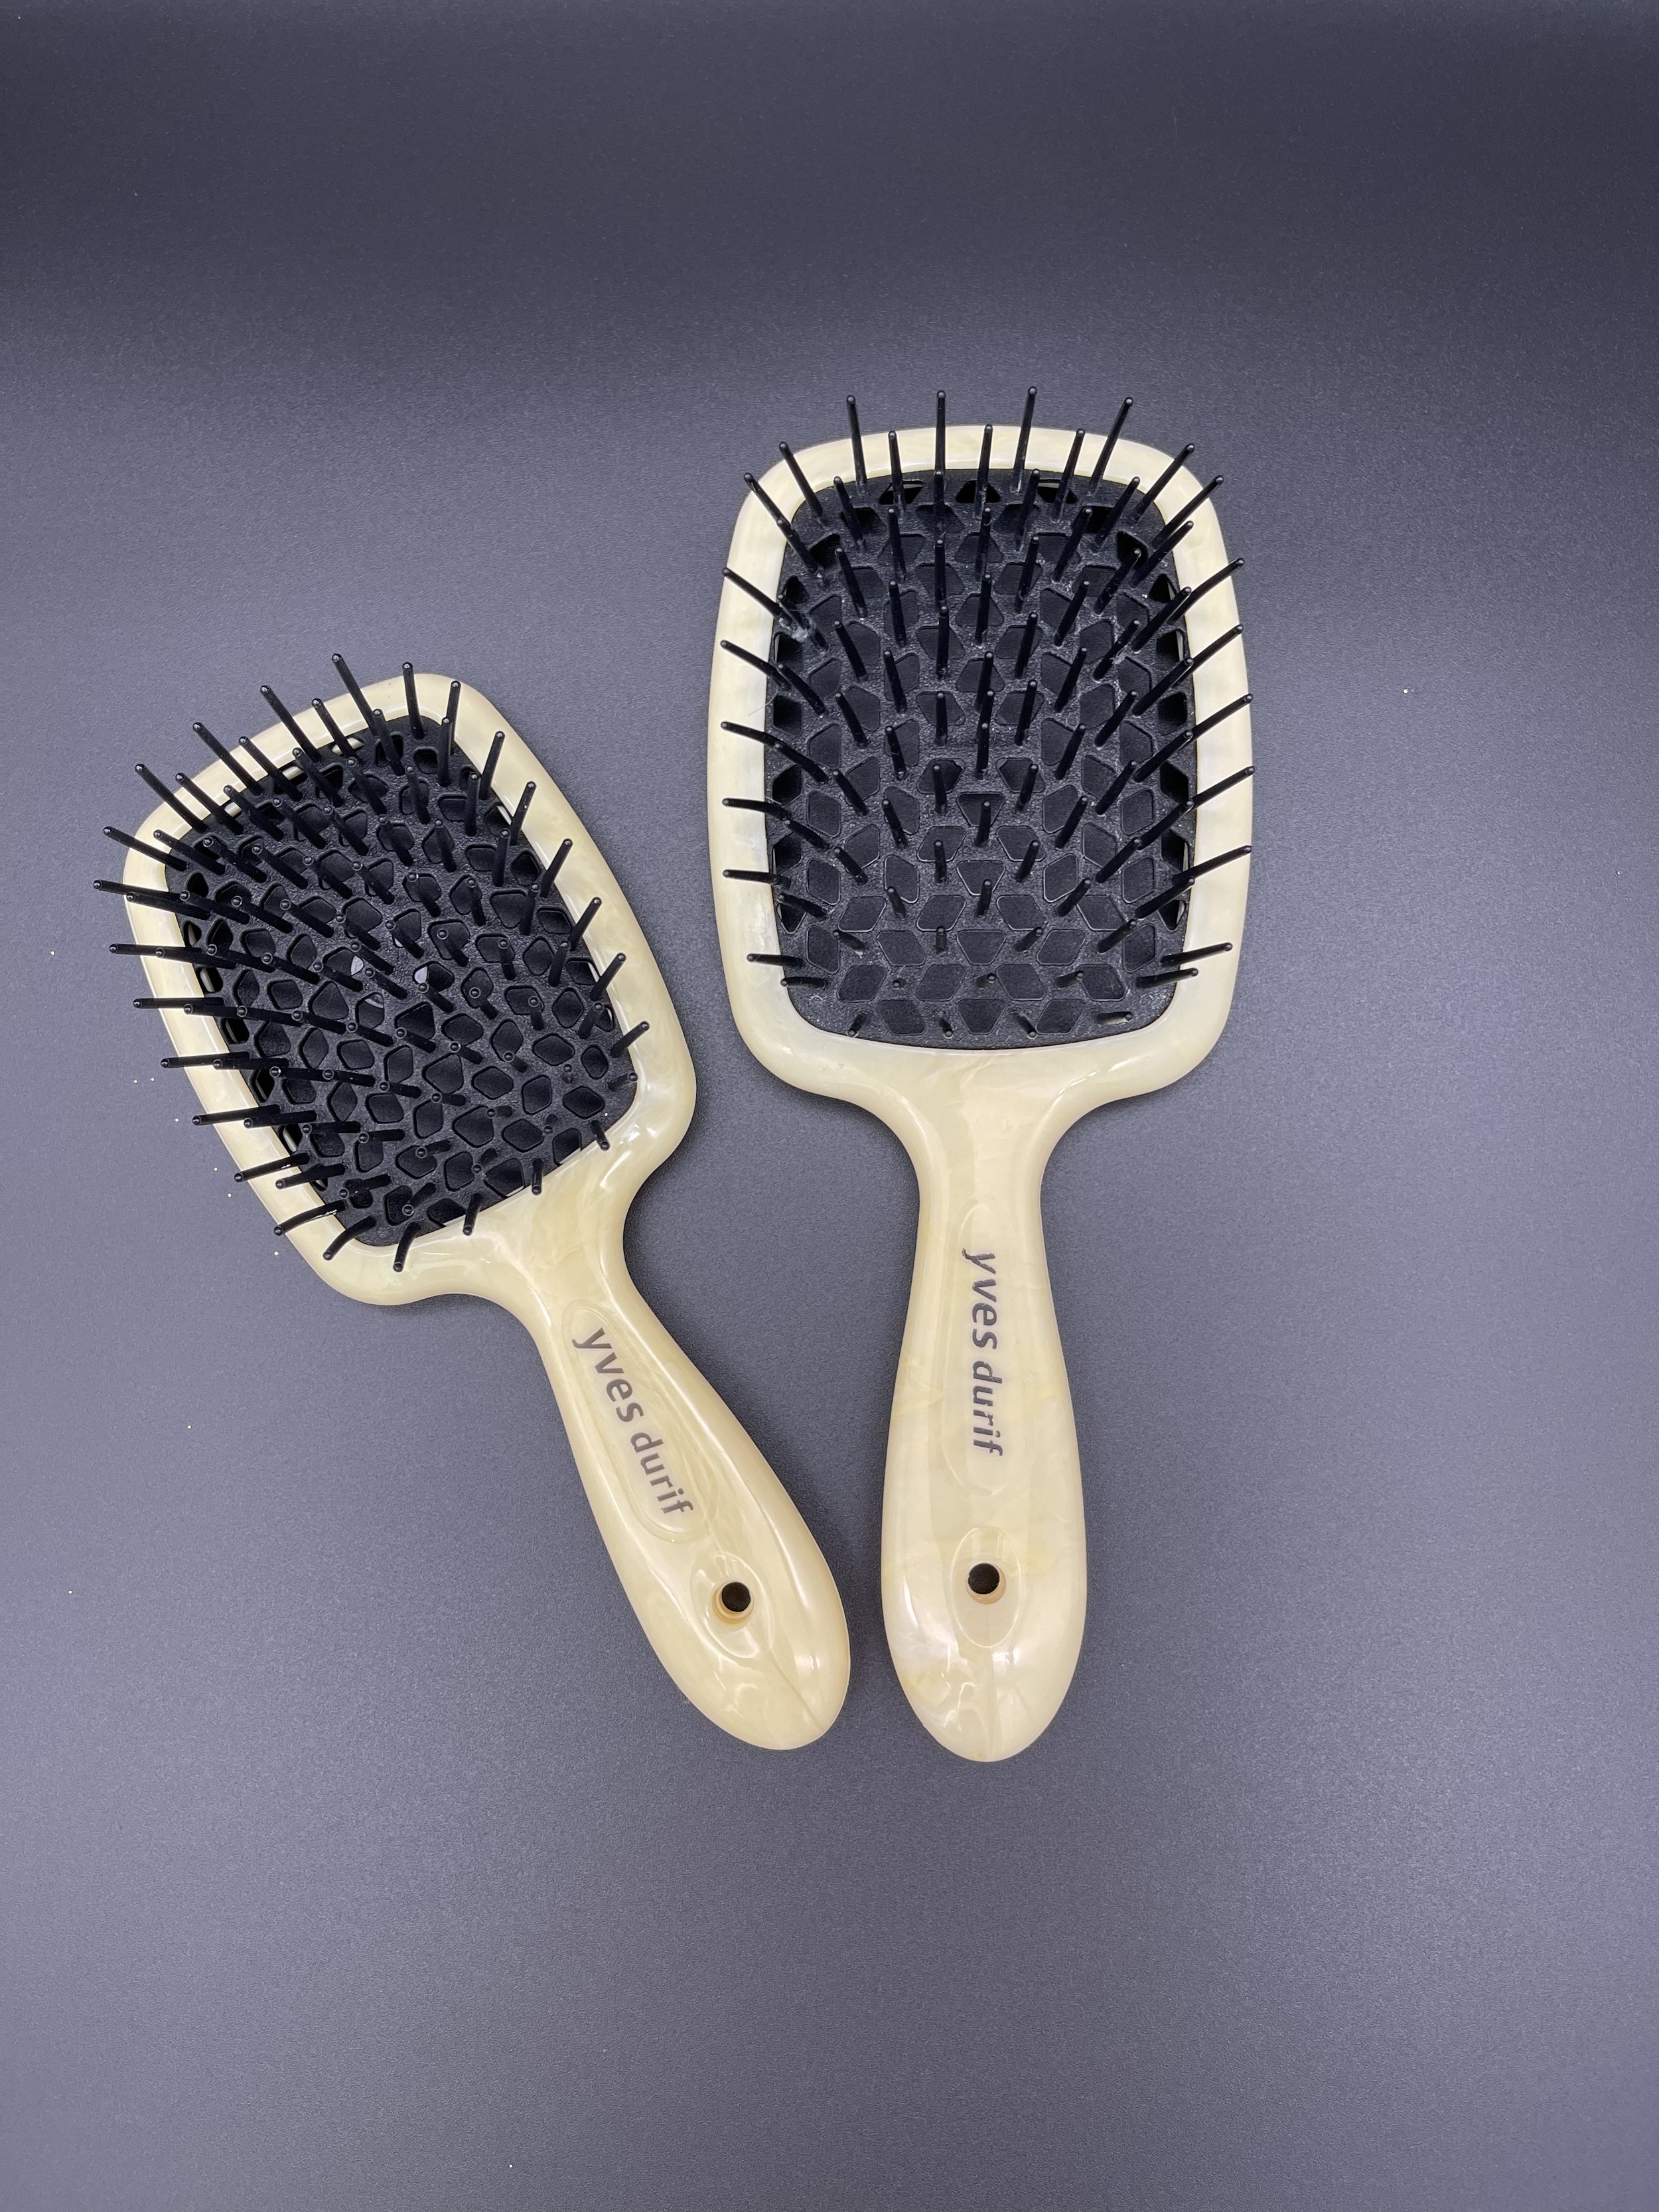 Yves Durif Mini Brush and Comb Set — Yves Durif Salon